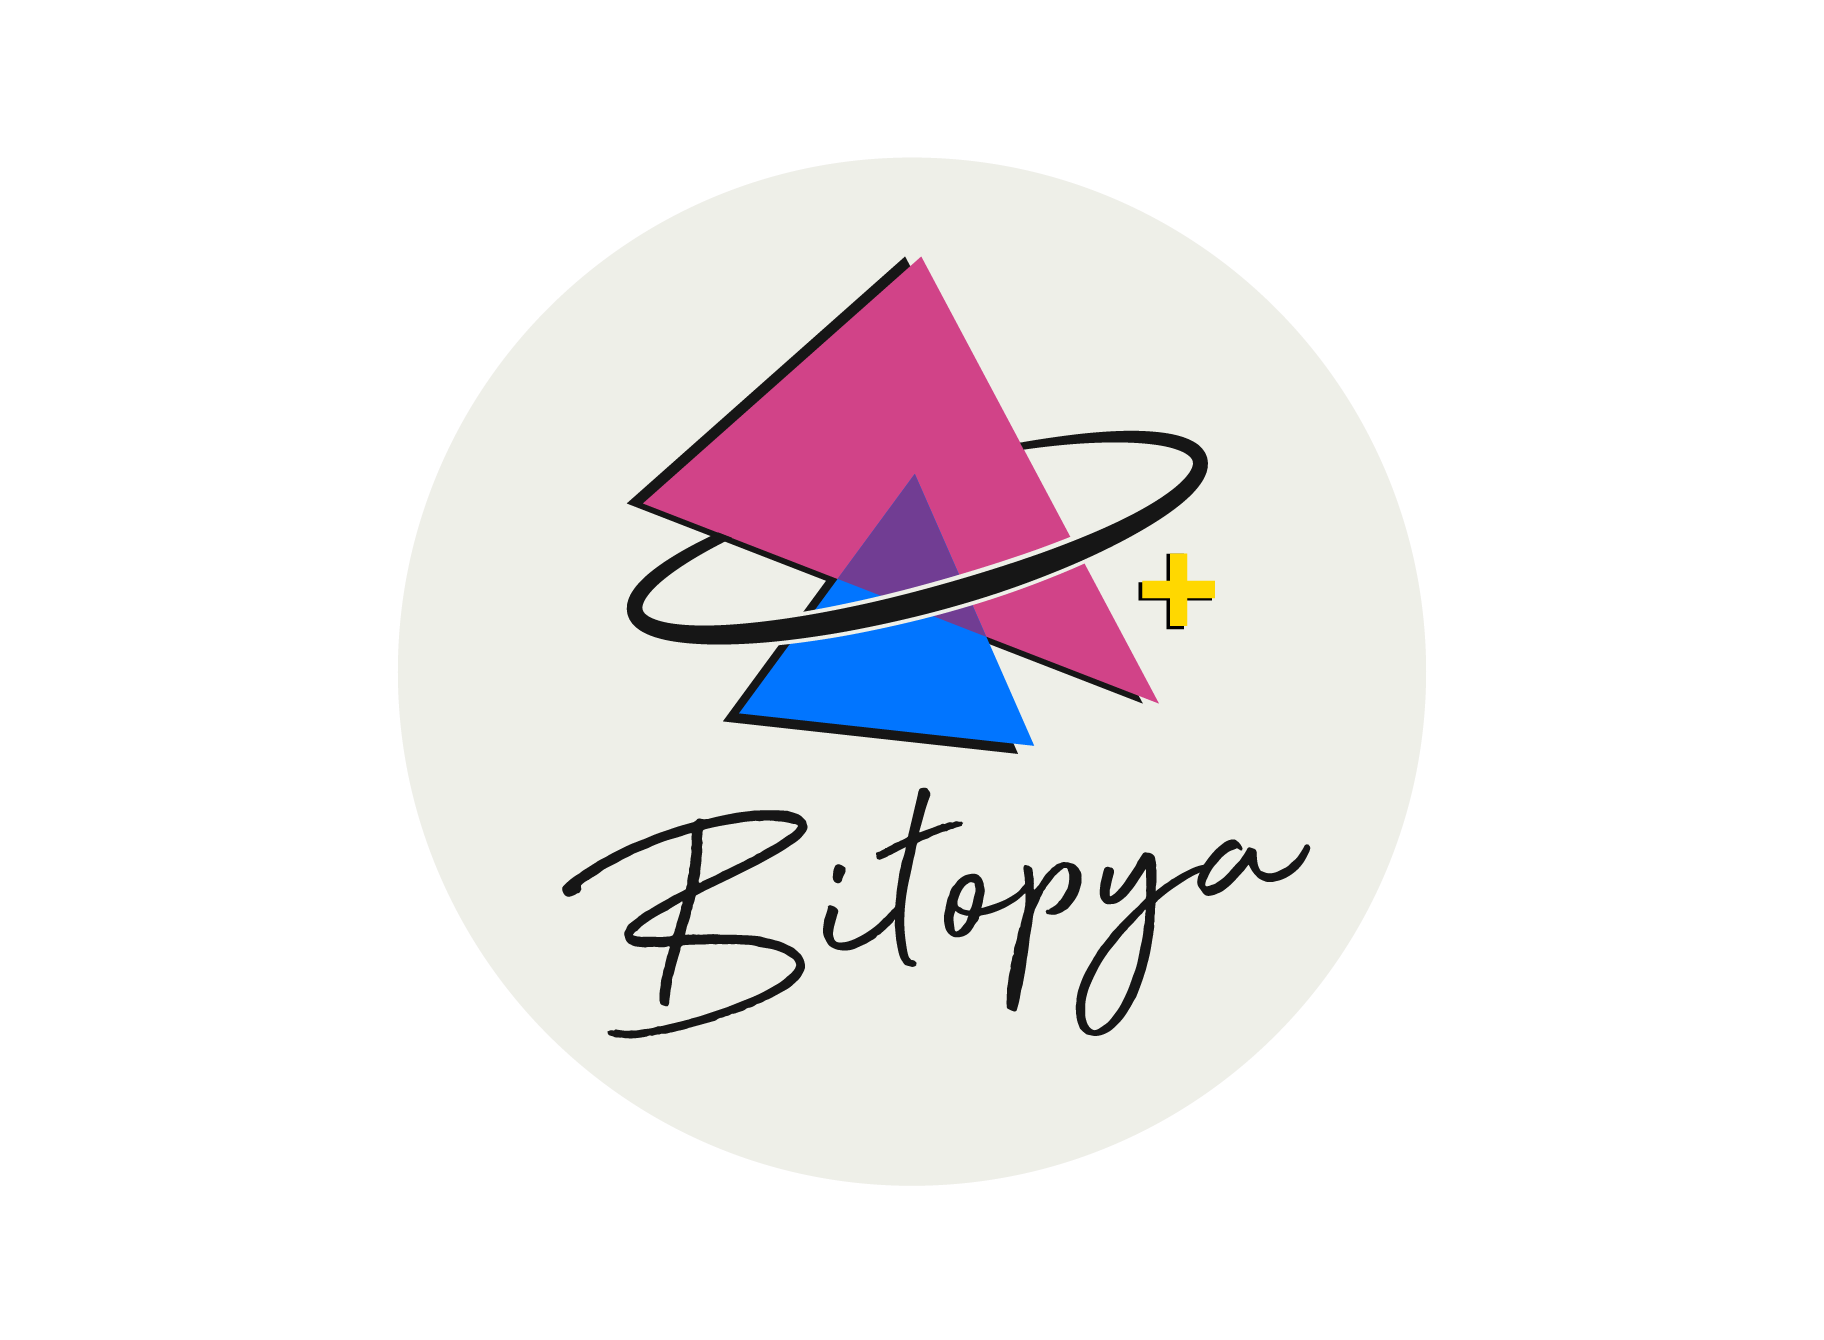 Bitopya